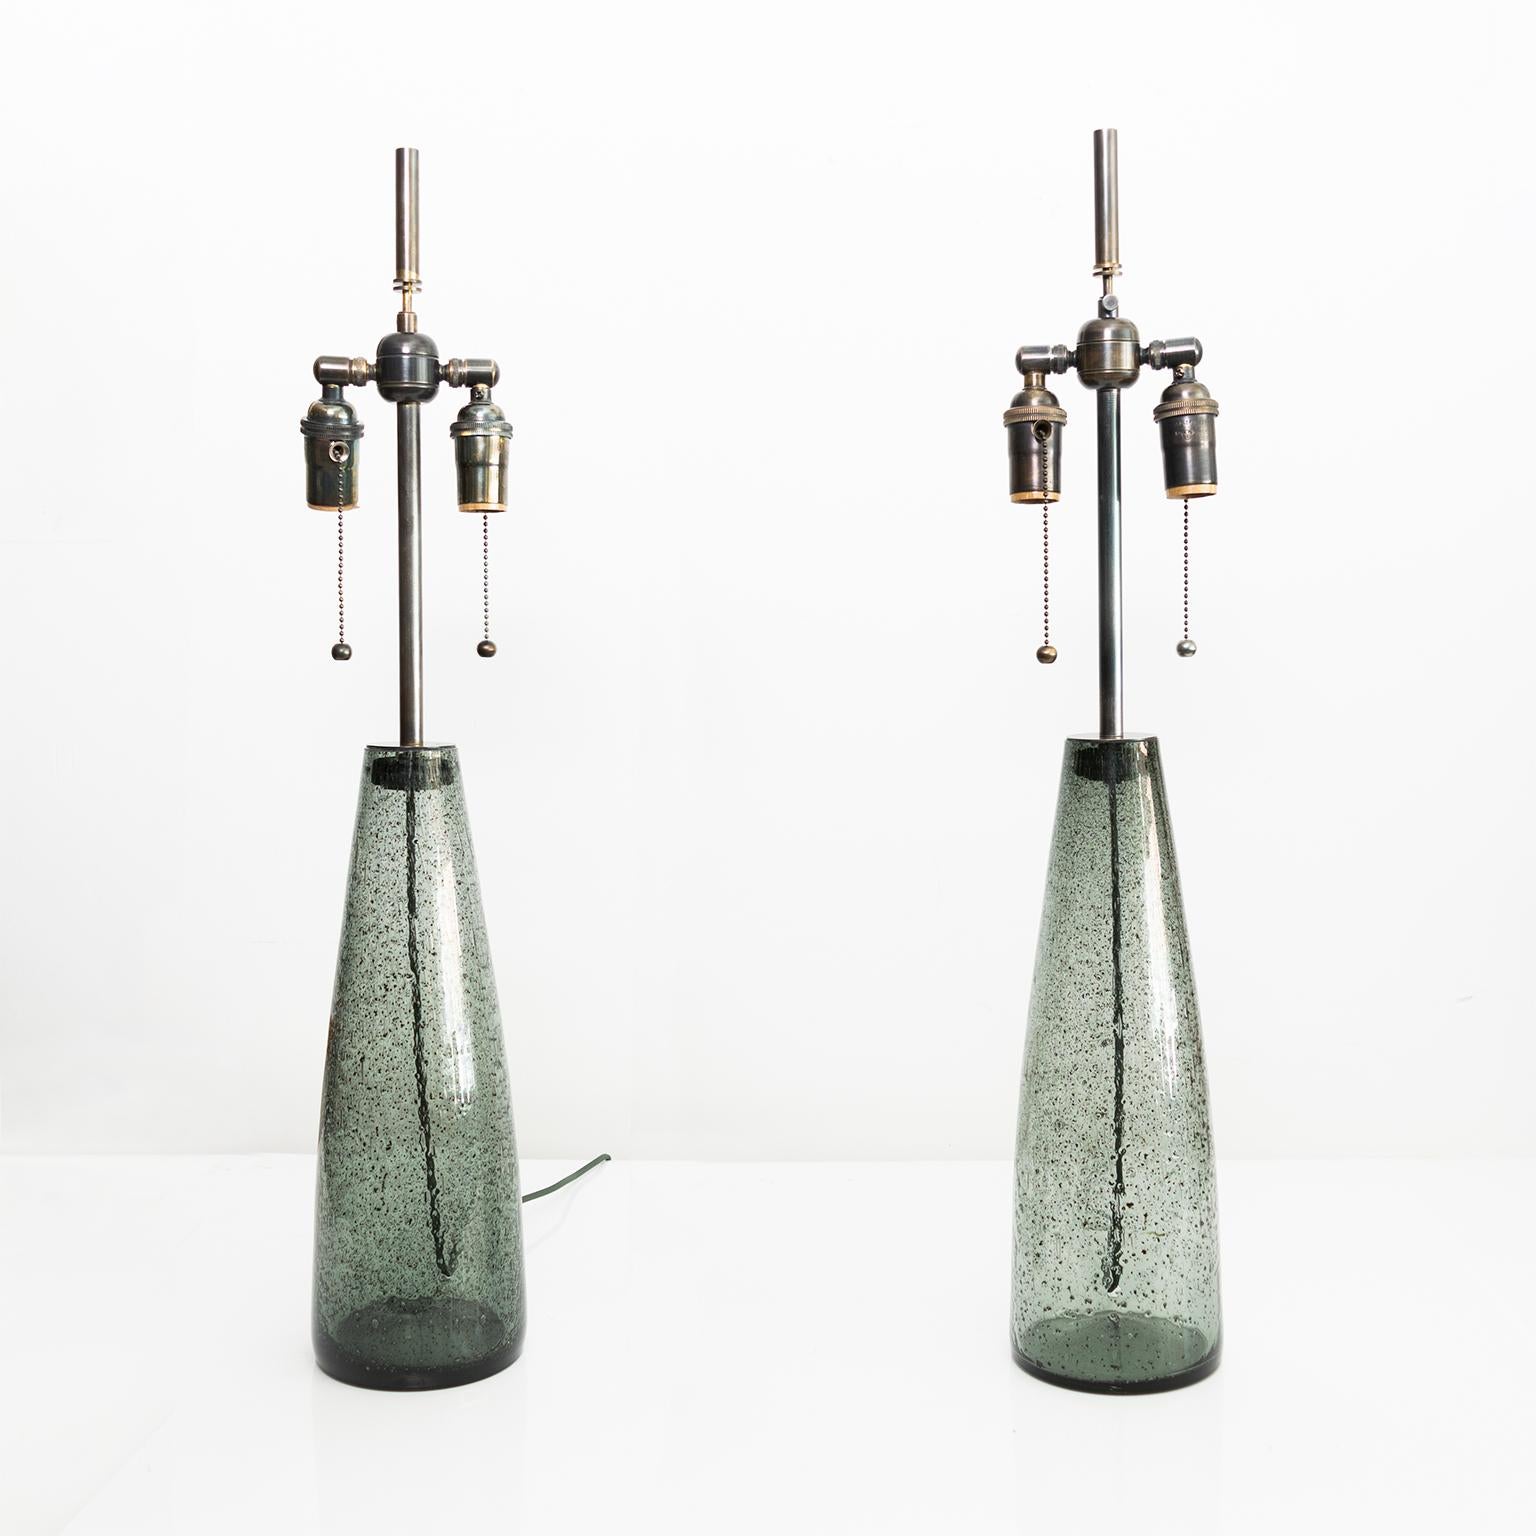 Patinated Scandinavian Modern Pair of Stromboli Lamps by Bengt Orup, Hyllinge Glasbruk For Sale